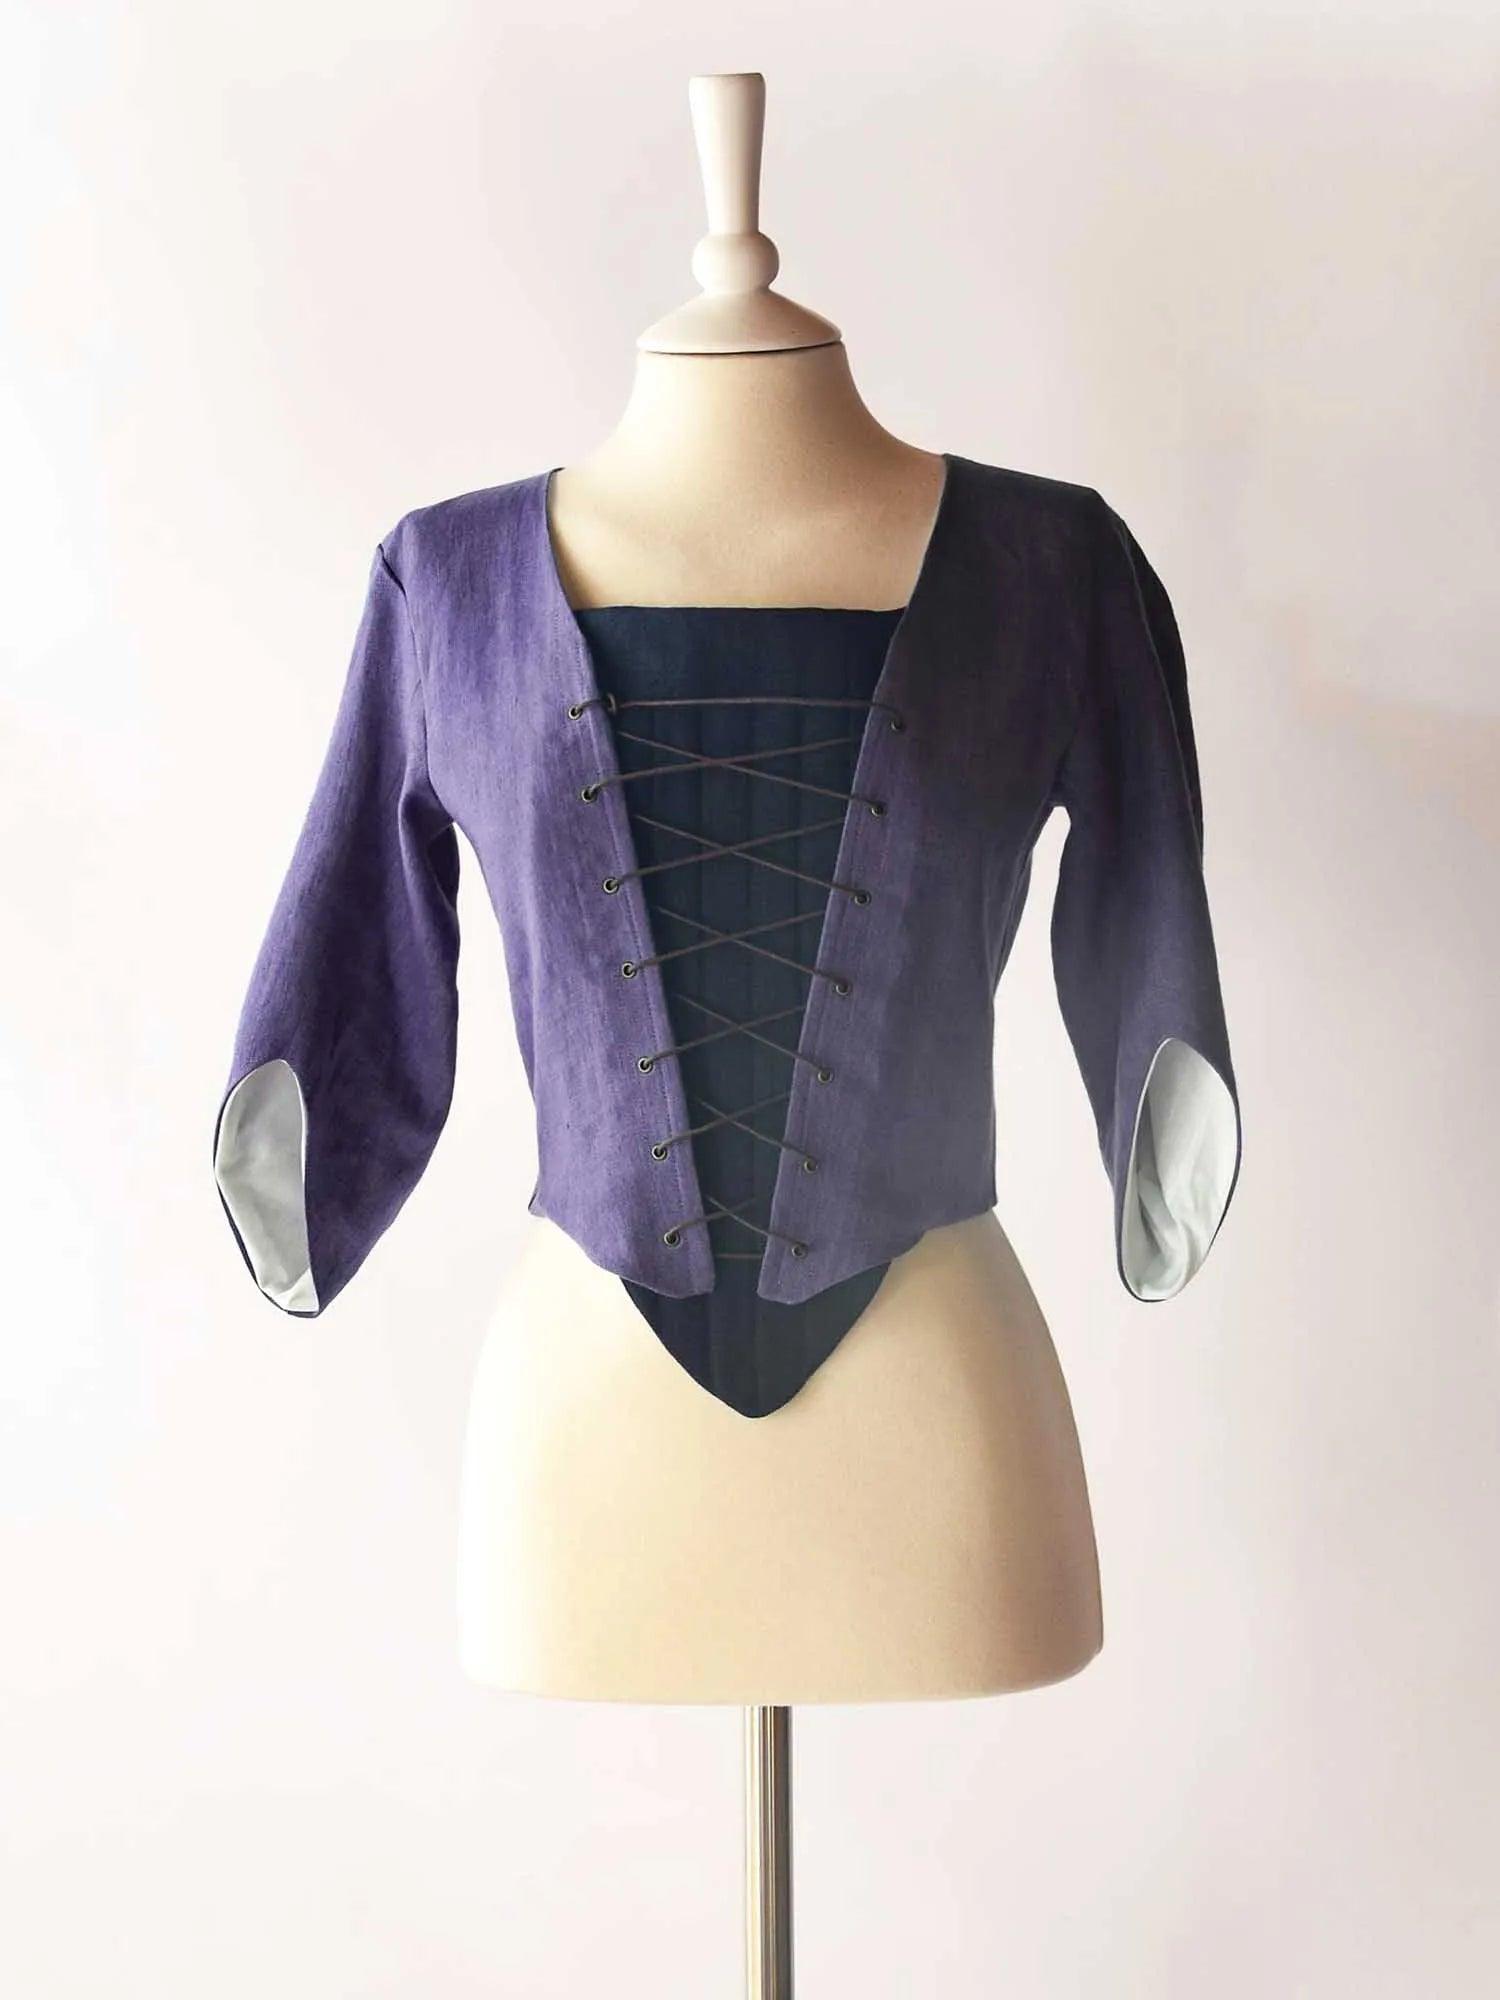 Lace-Up Bodice in Plum Purple Linen - Atelier Serraspina